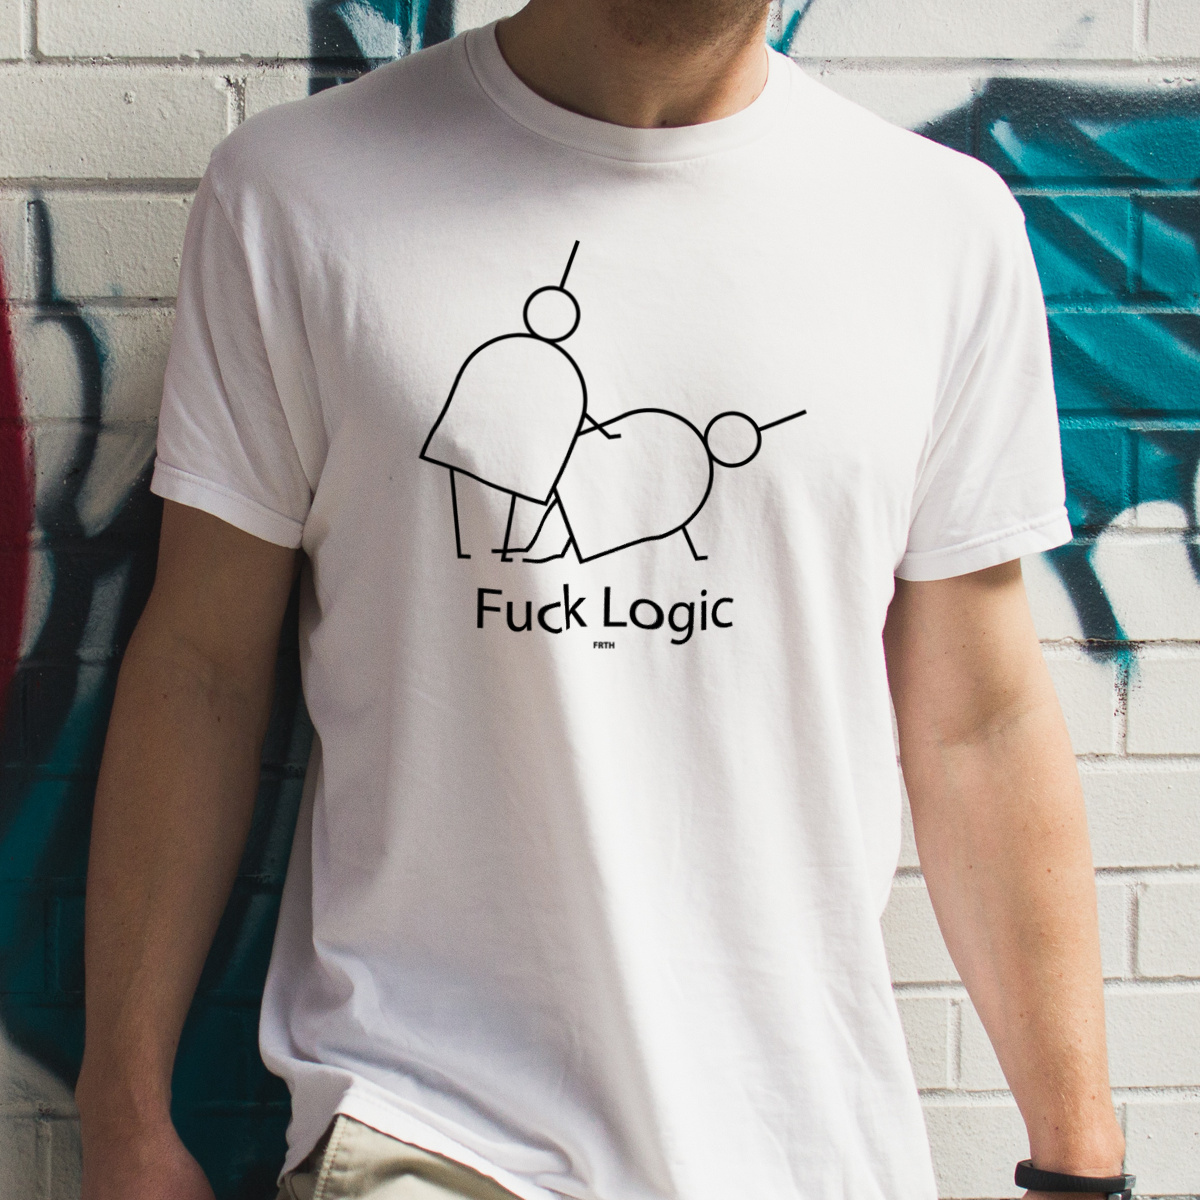 F*ck logic - Męska Koszulka Biała